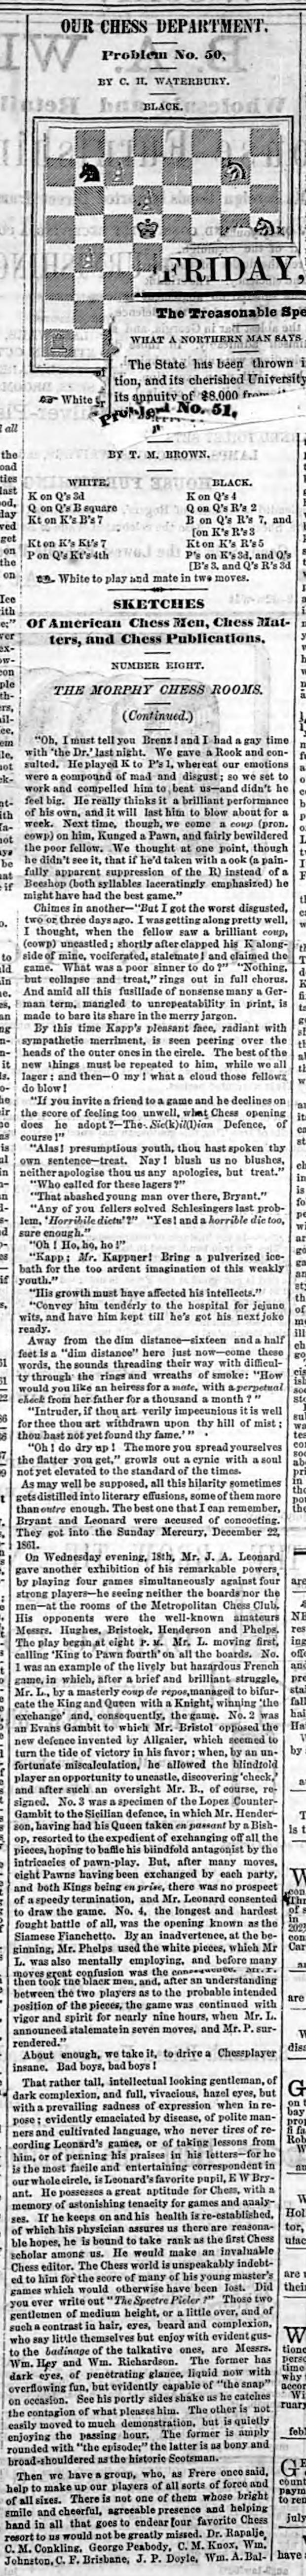 1867.08.23-01 Macon Georgia Weekly Telegraph.jpg